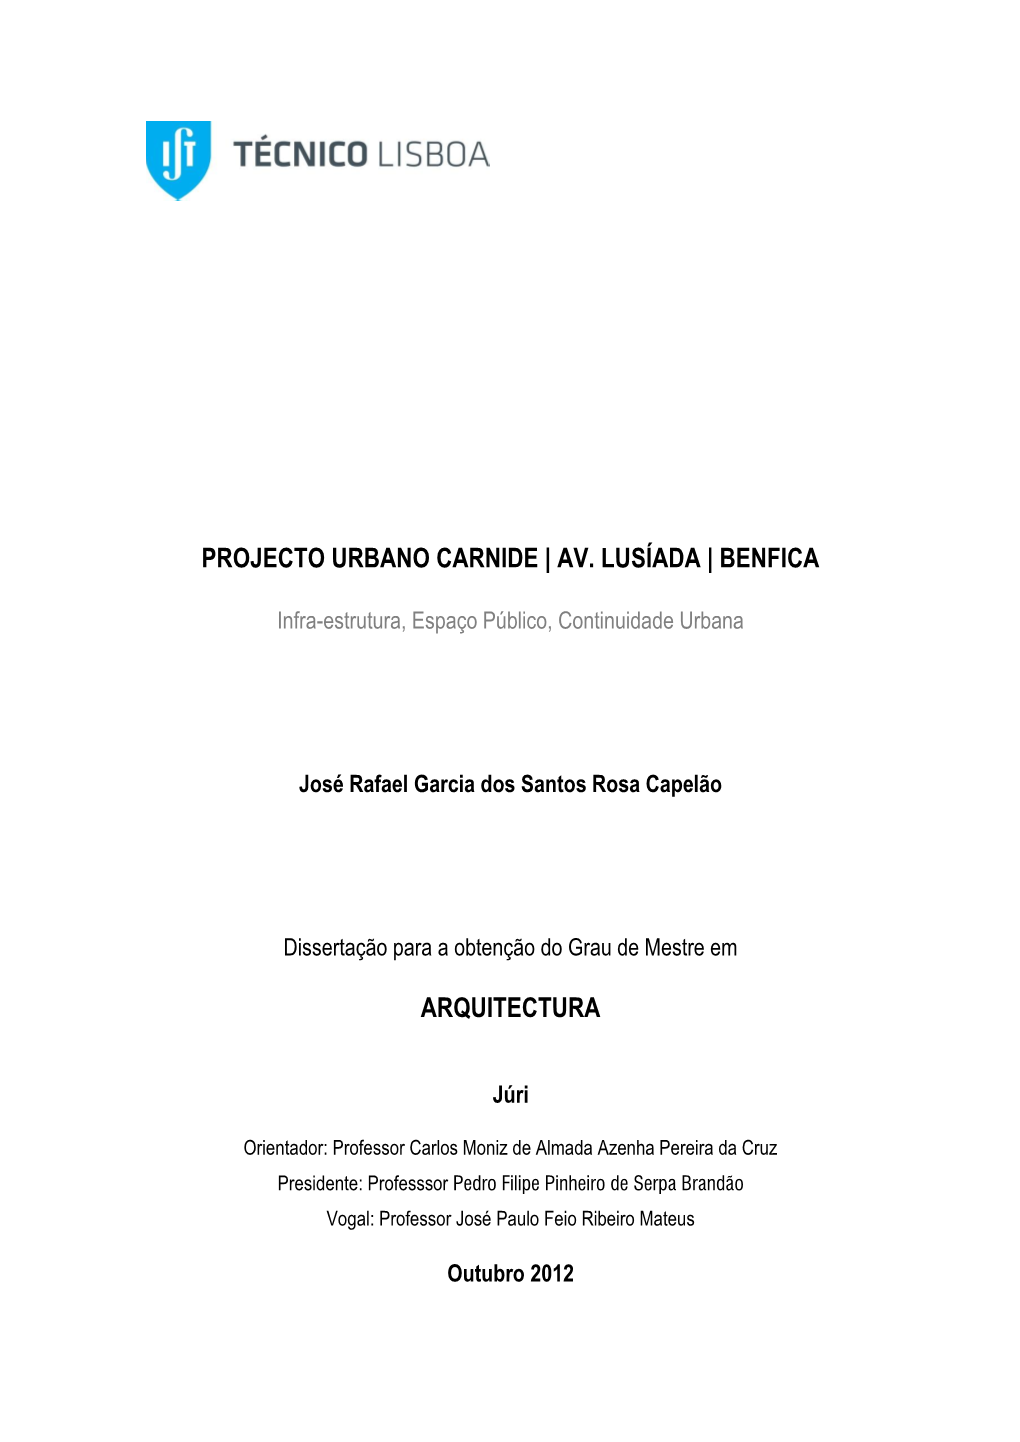 Projecto Urbano Carnide | Av. Lusíada | Benfica